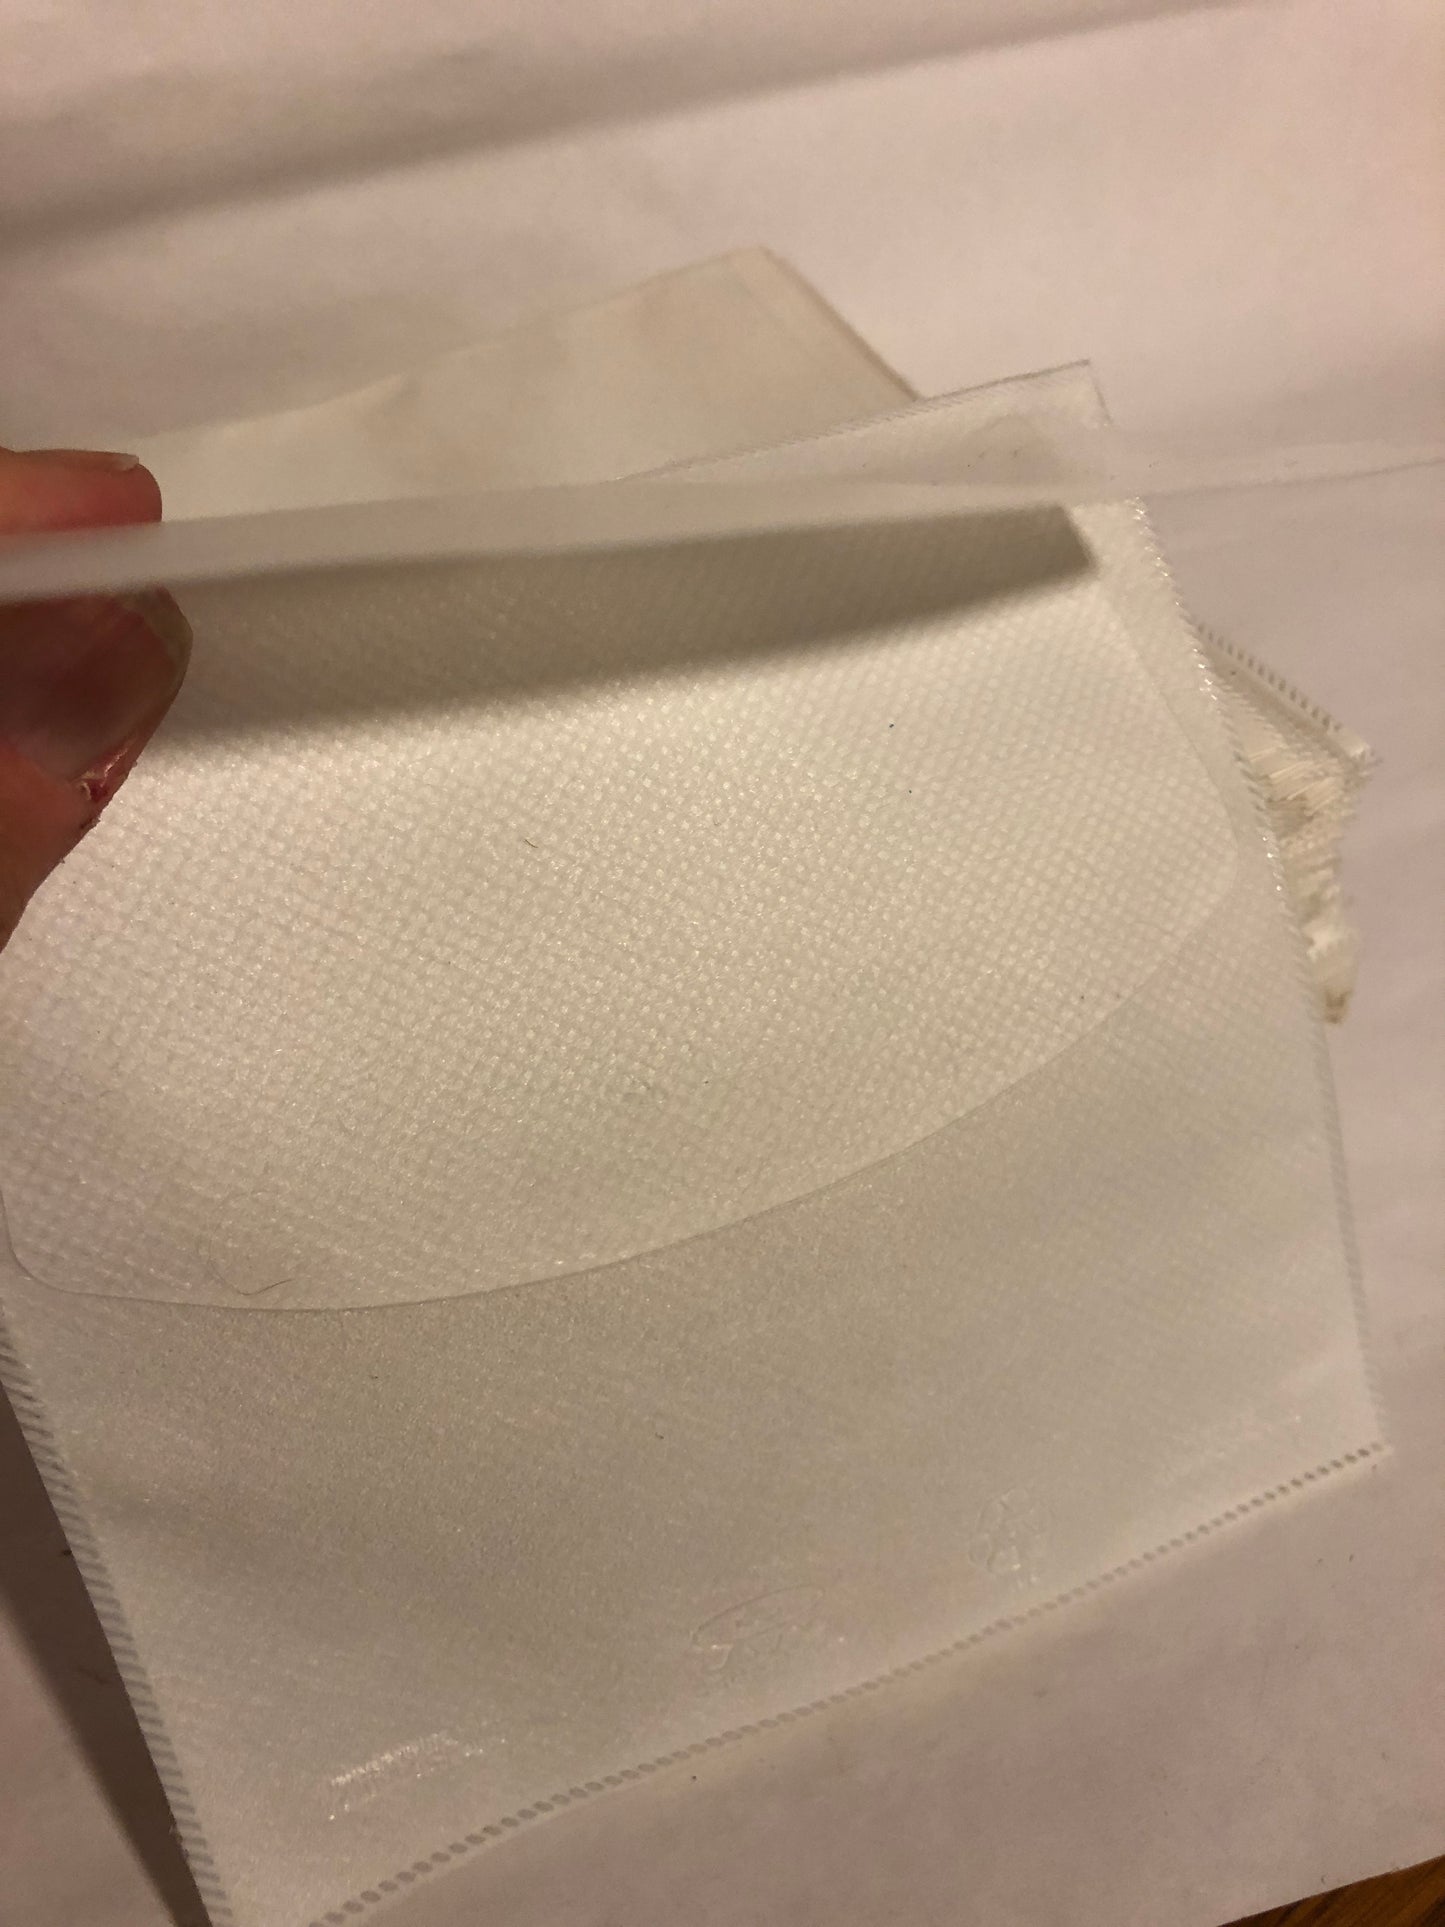 NIB CD Plastic Sleeve White - 50 PACK